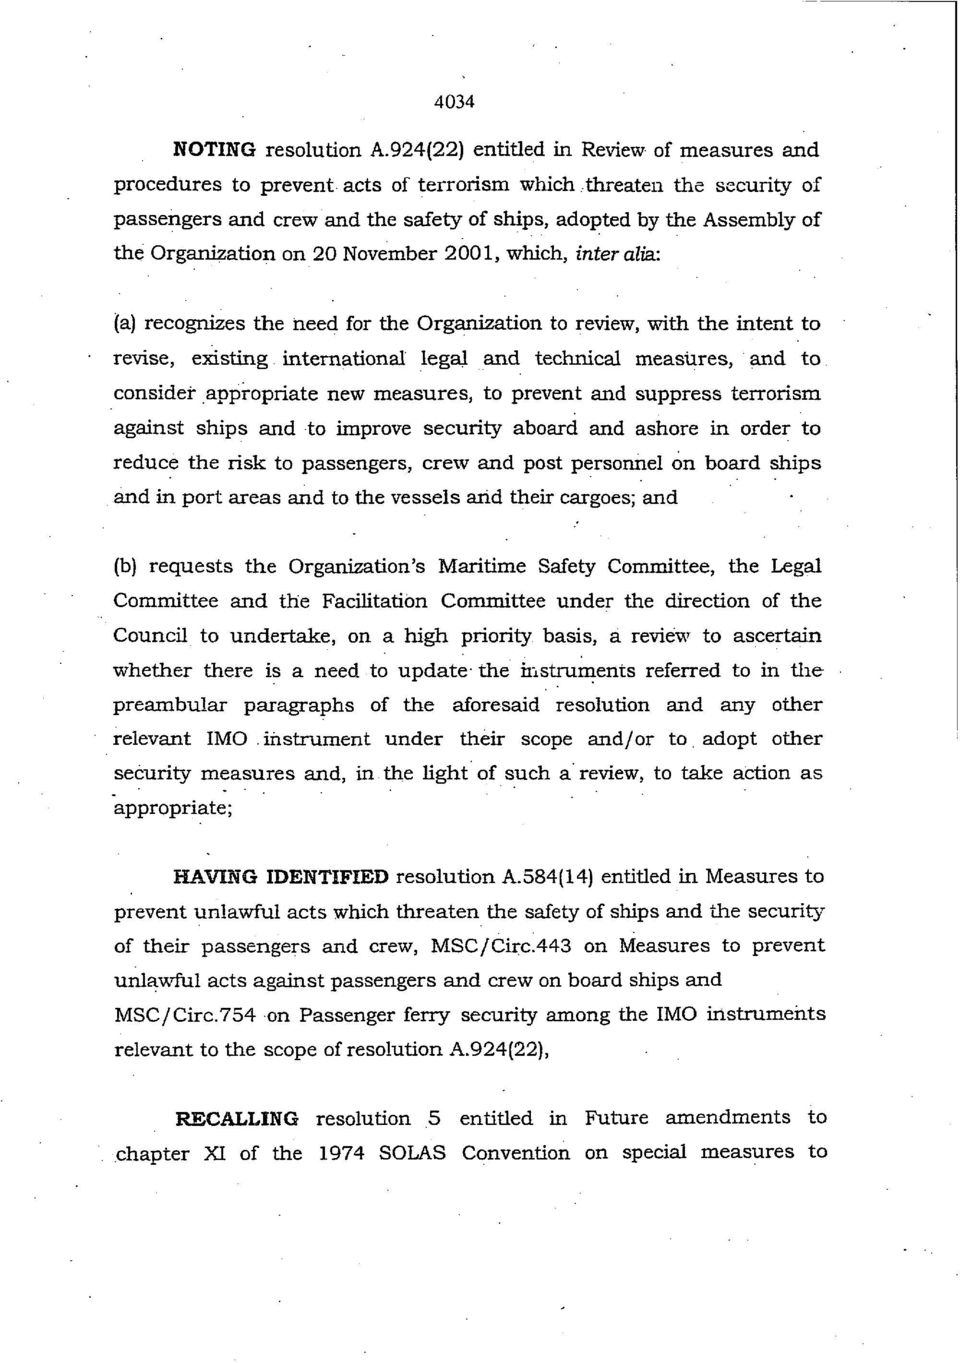 Organization on 20 November 2001, which, inter alia.